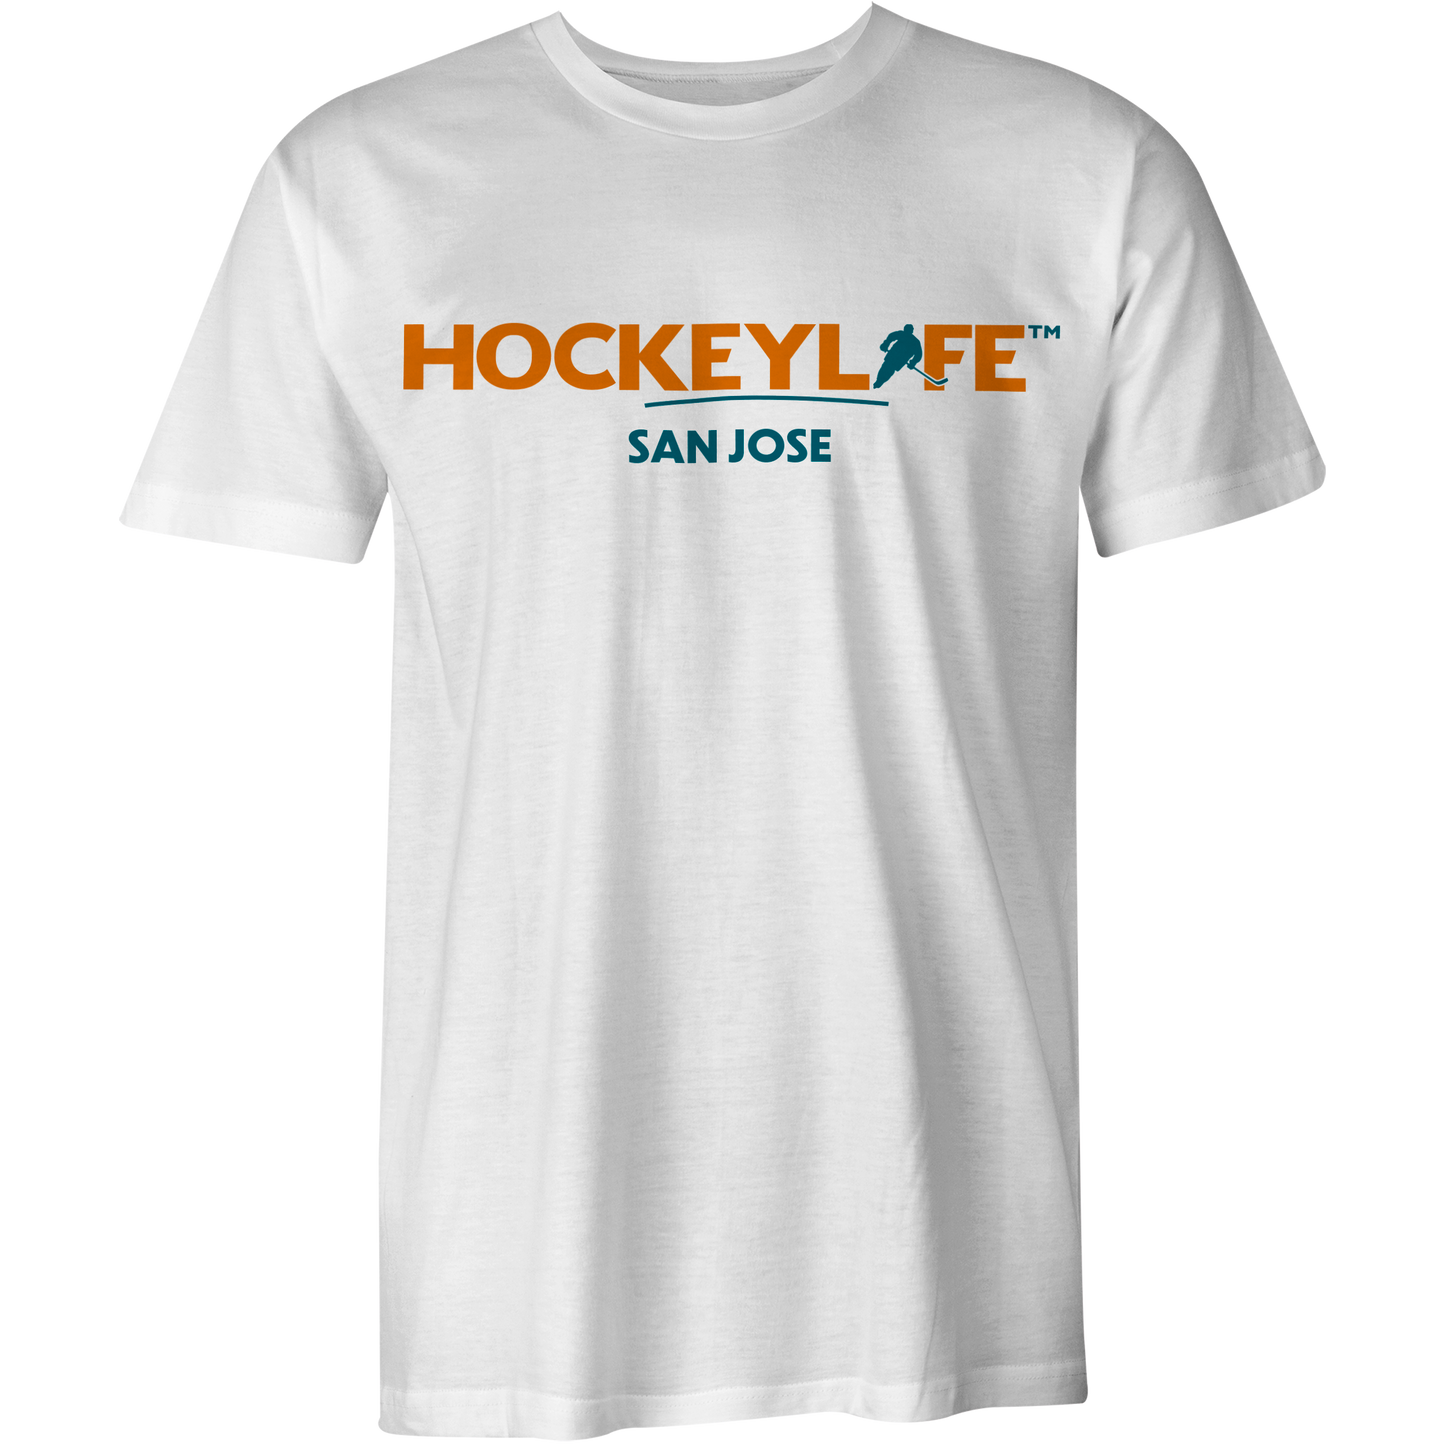 HockeyLife San Jose Tee Shirt